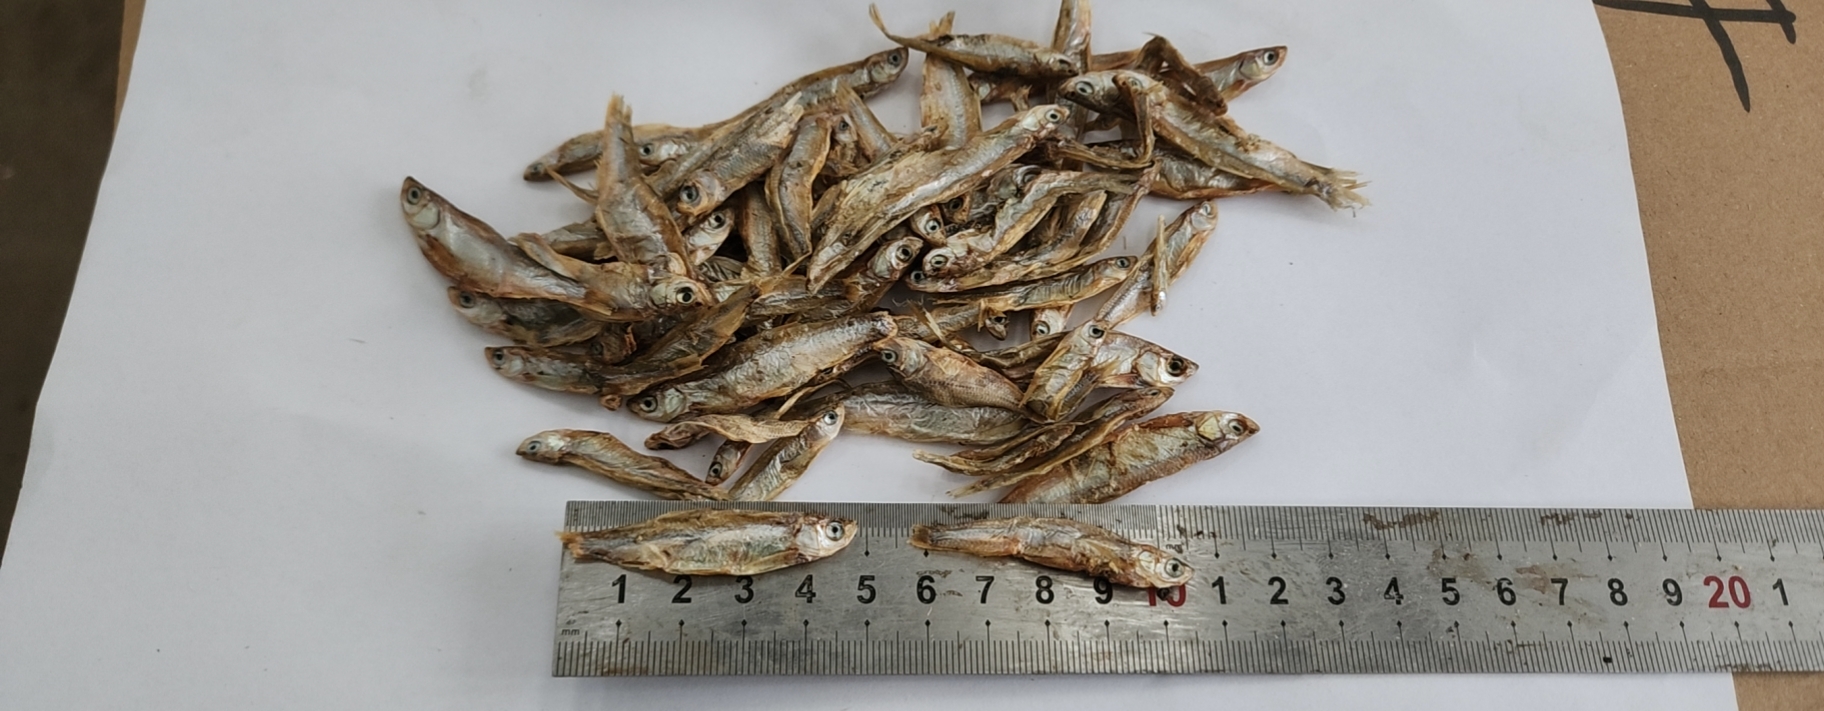 Sun dried fish 3-5cm